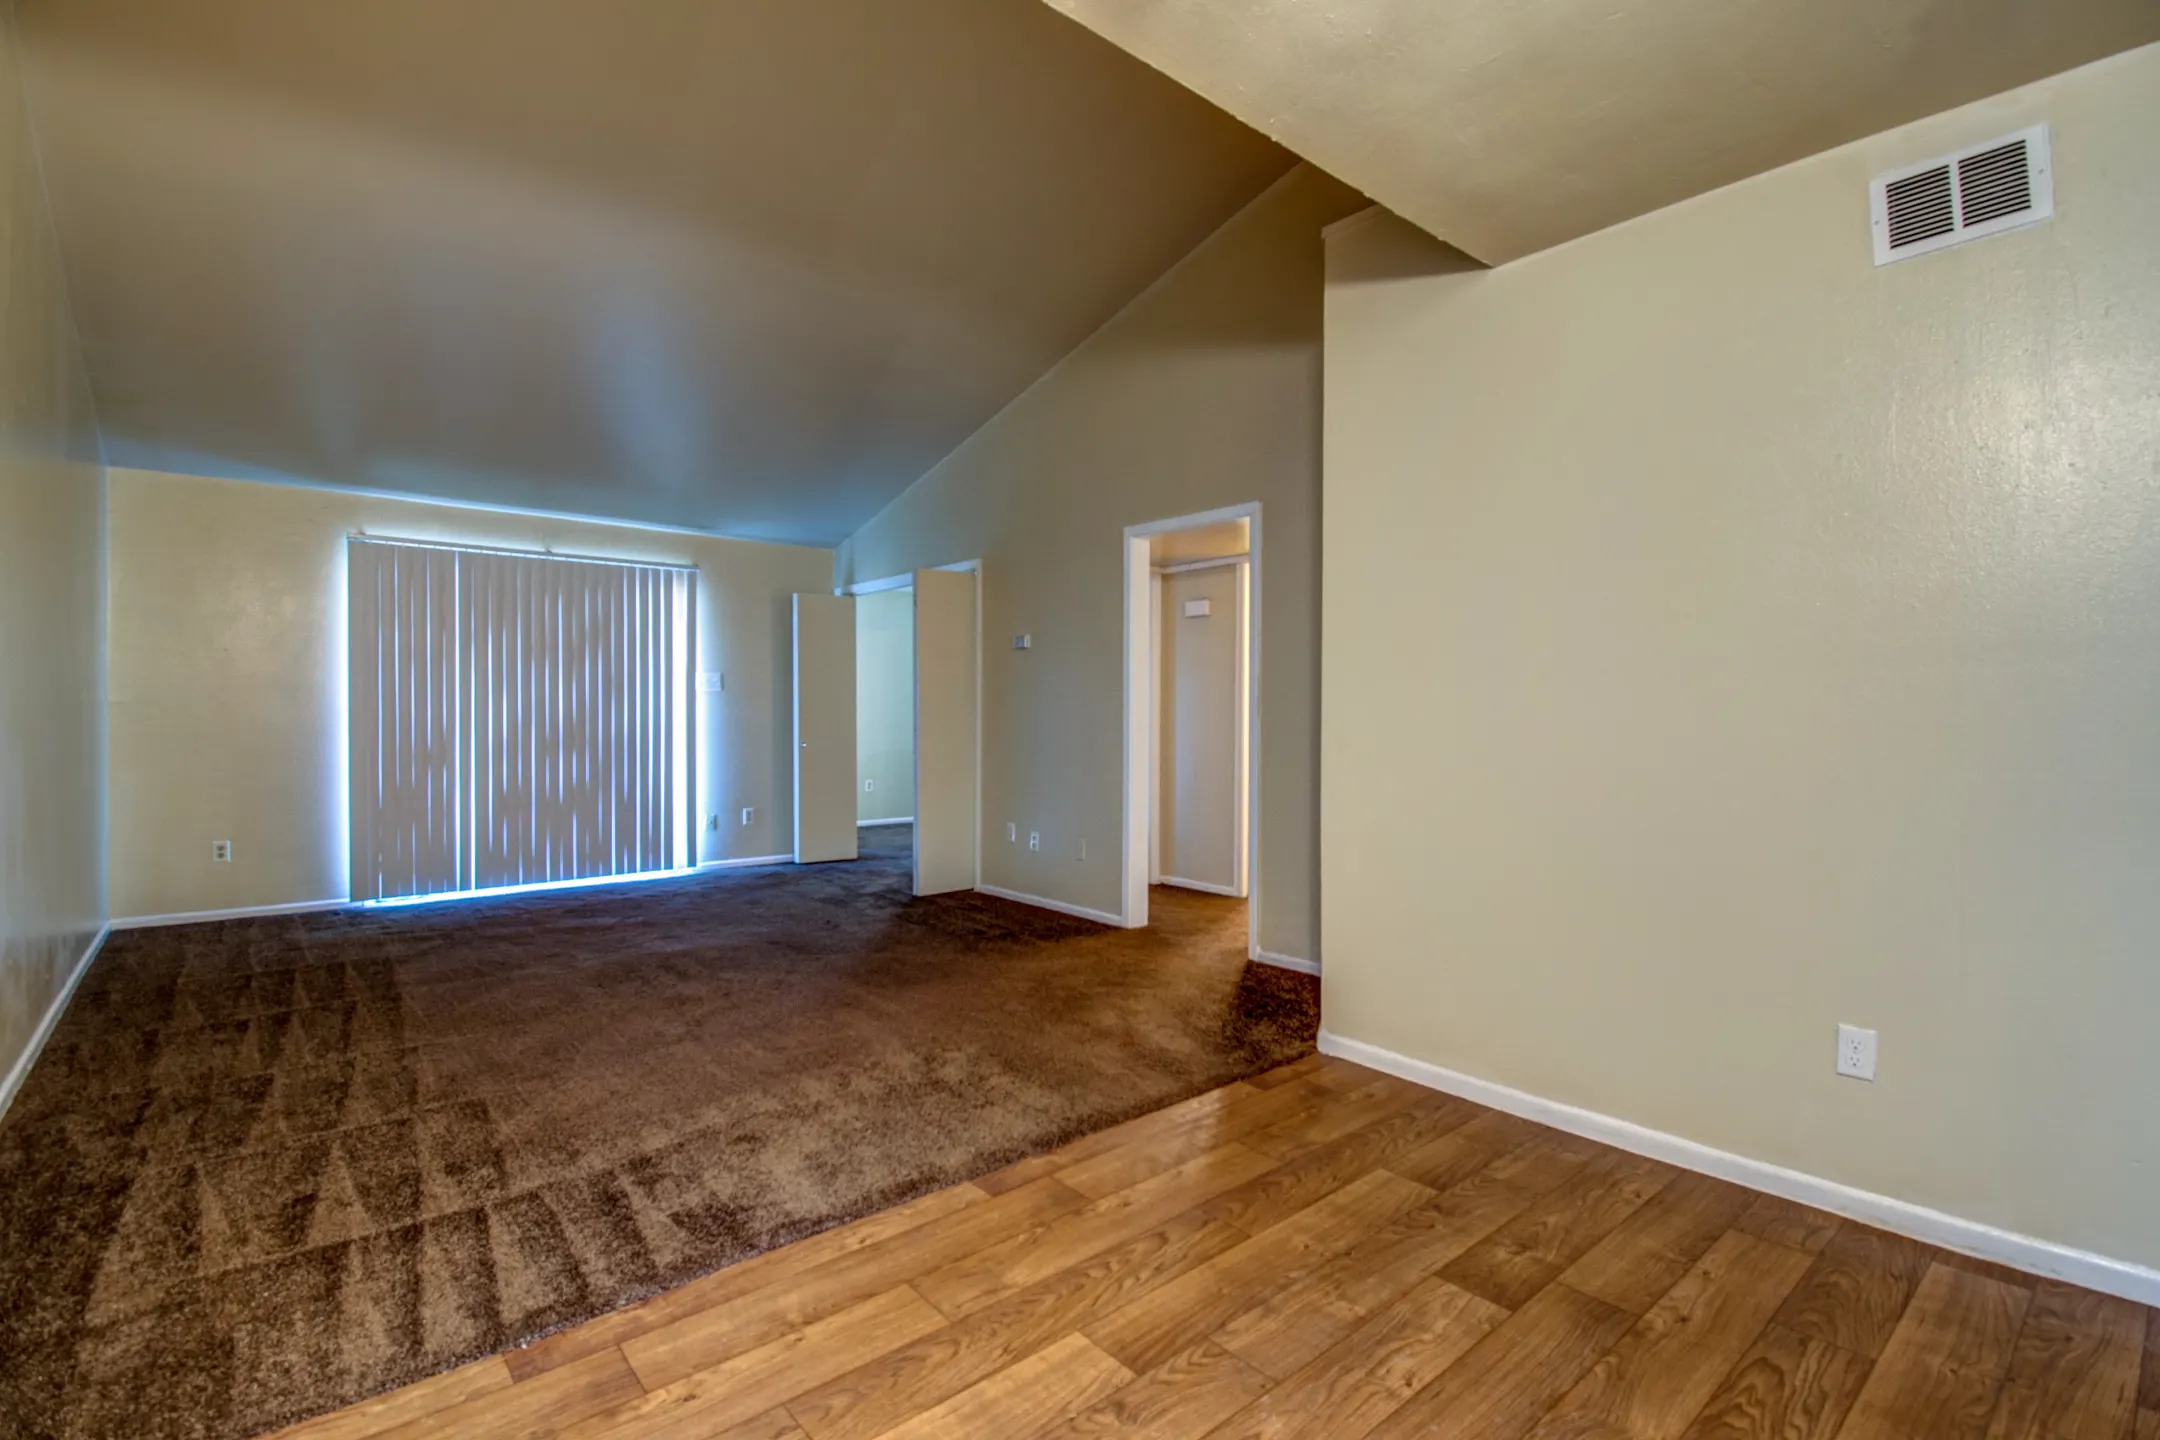 Living Room - Bay Bluff Apartments - Corpus Christi, TX